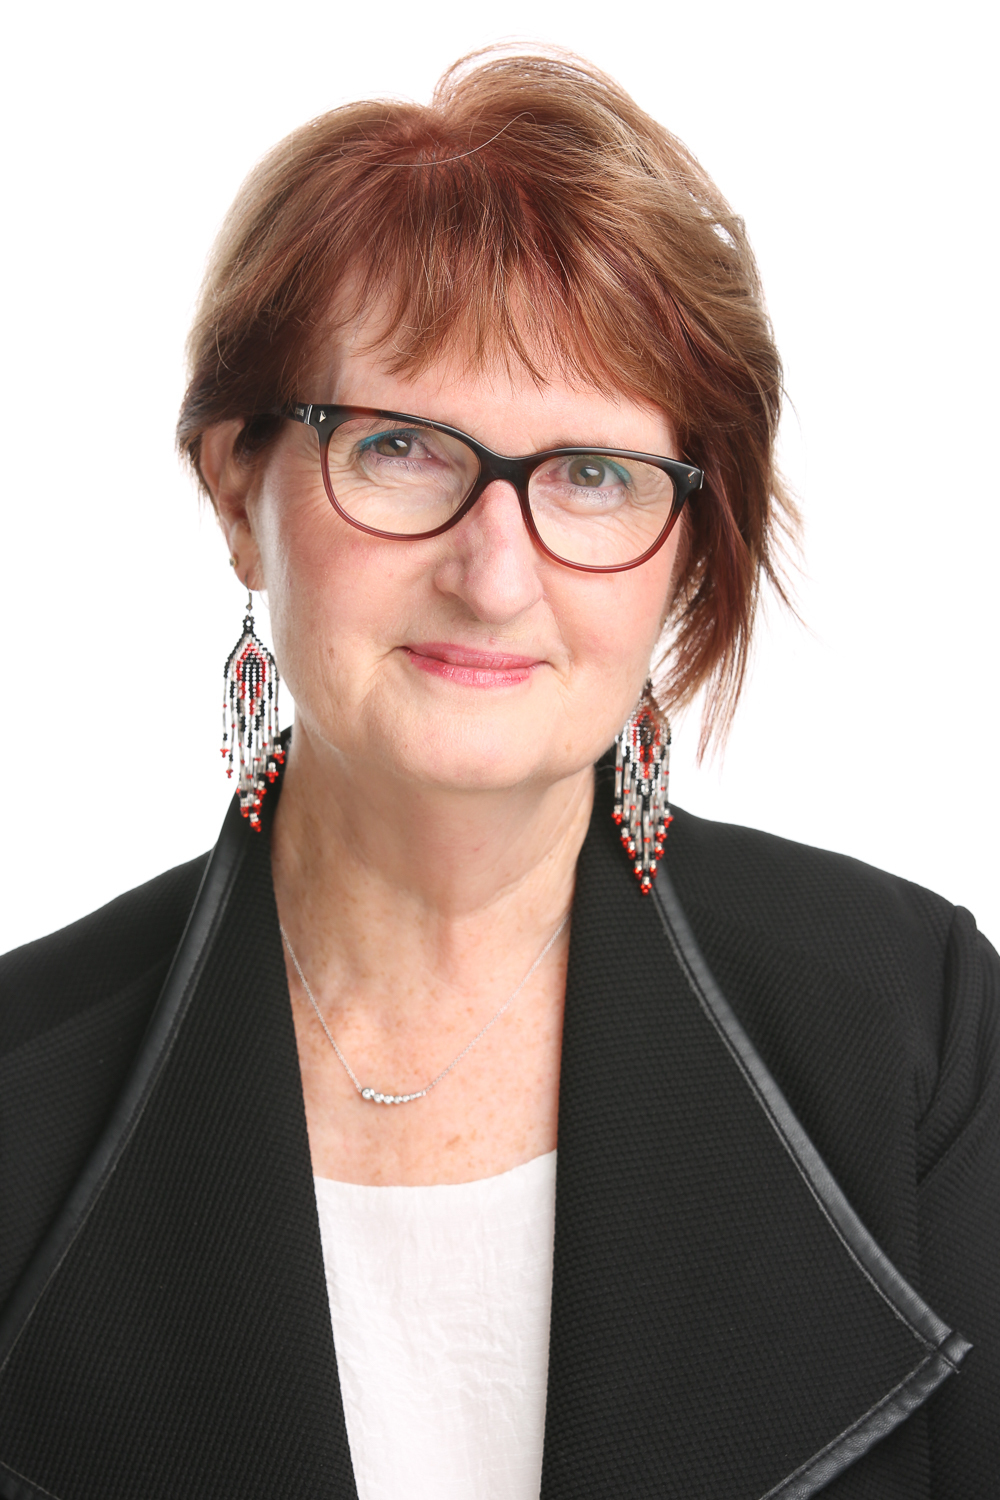 NSW Mental Health Commissioner Catherine Lourey